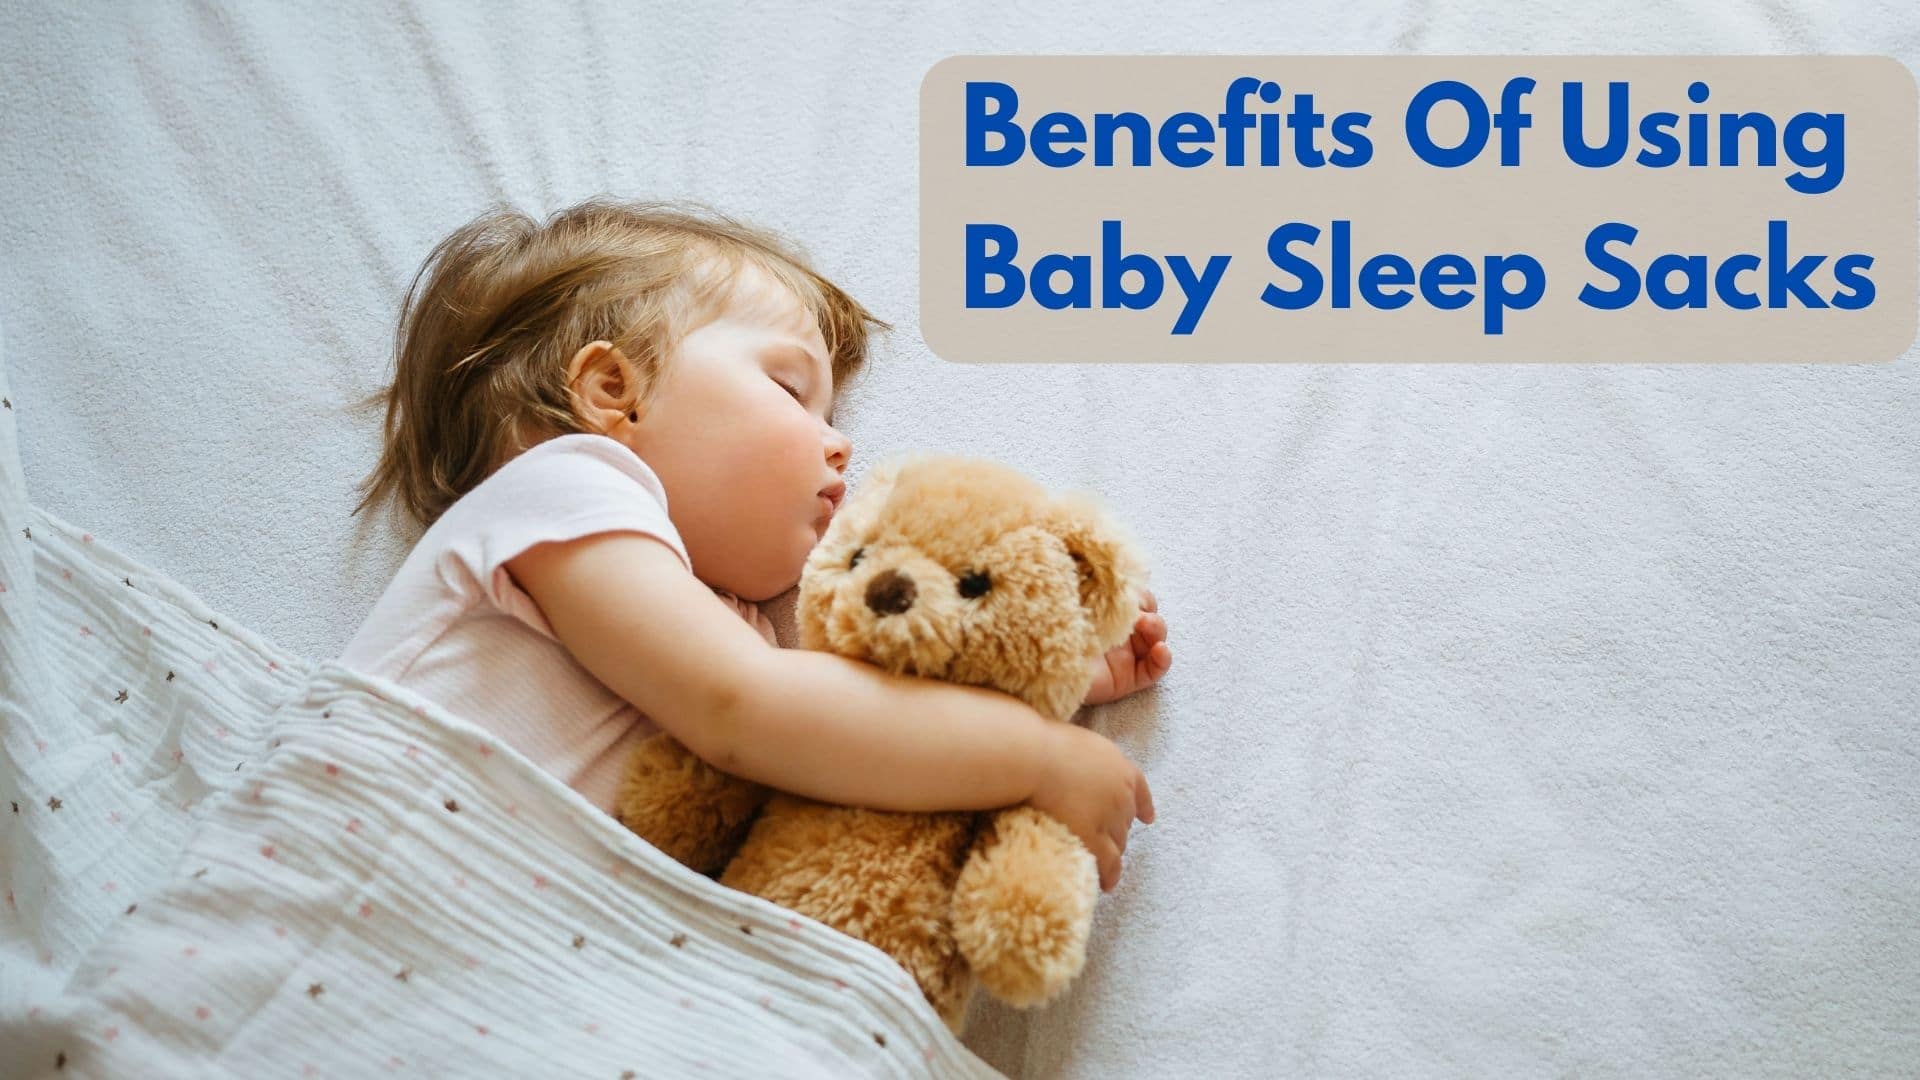 What Are The Benefits Of Using Baby Sleep Sacks?